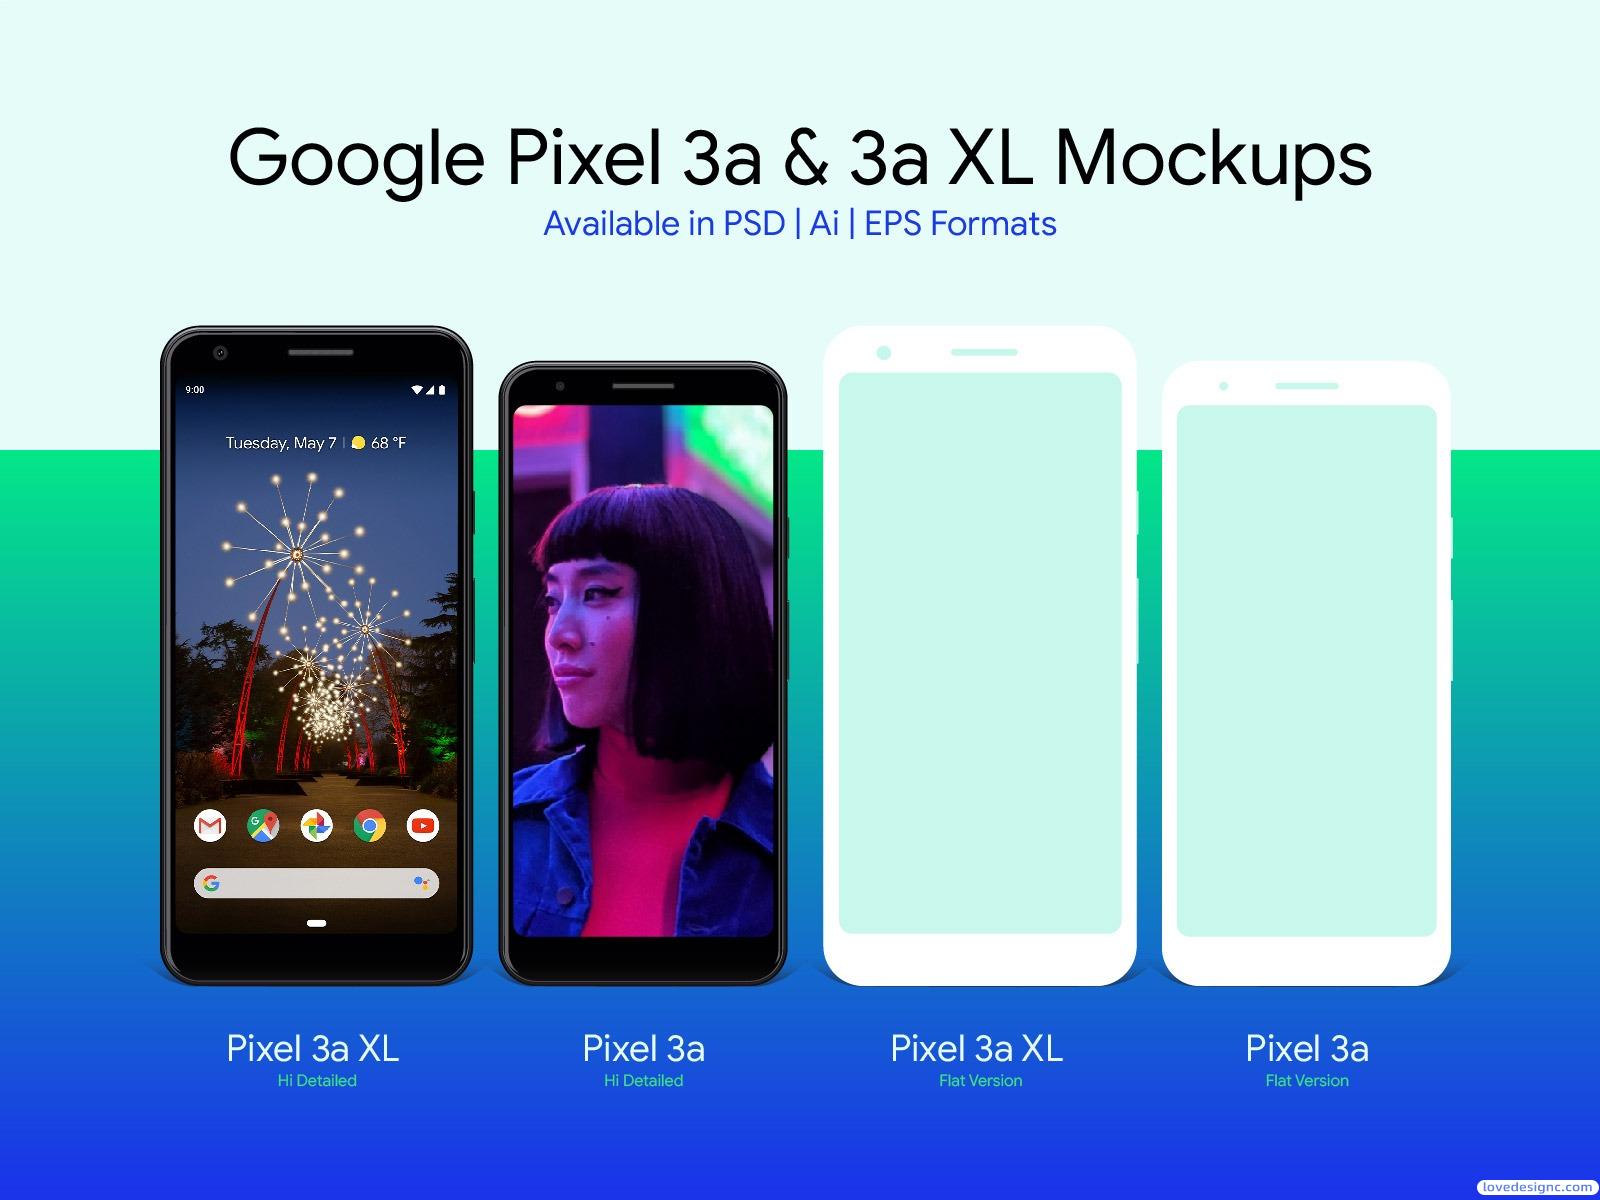 Google Pixel 3a & Pixel 3a XL Mockup-0475-爱设计爱分享c